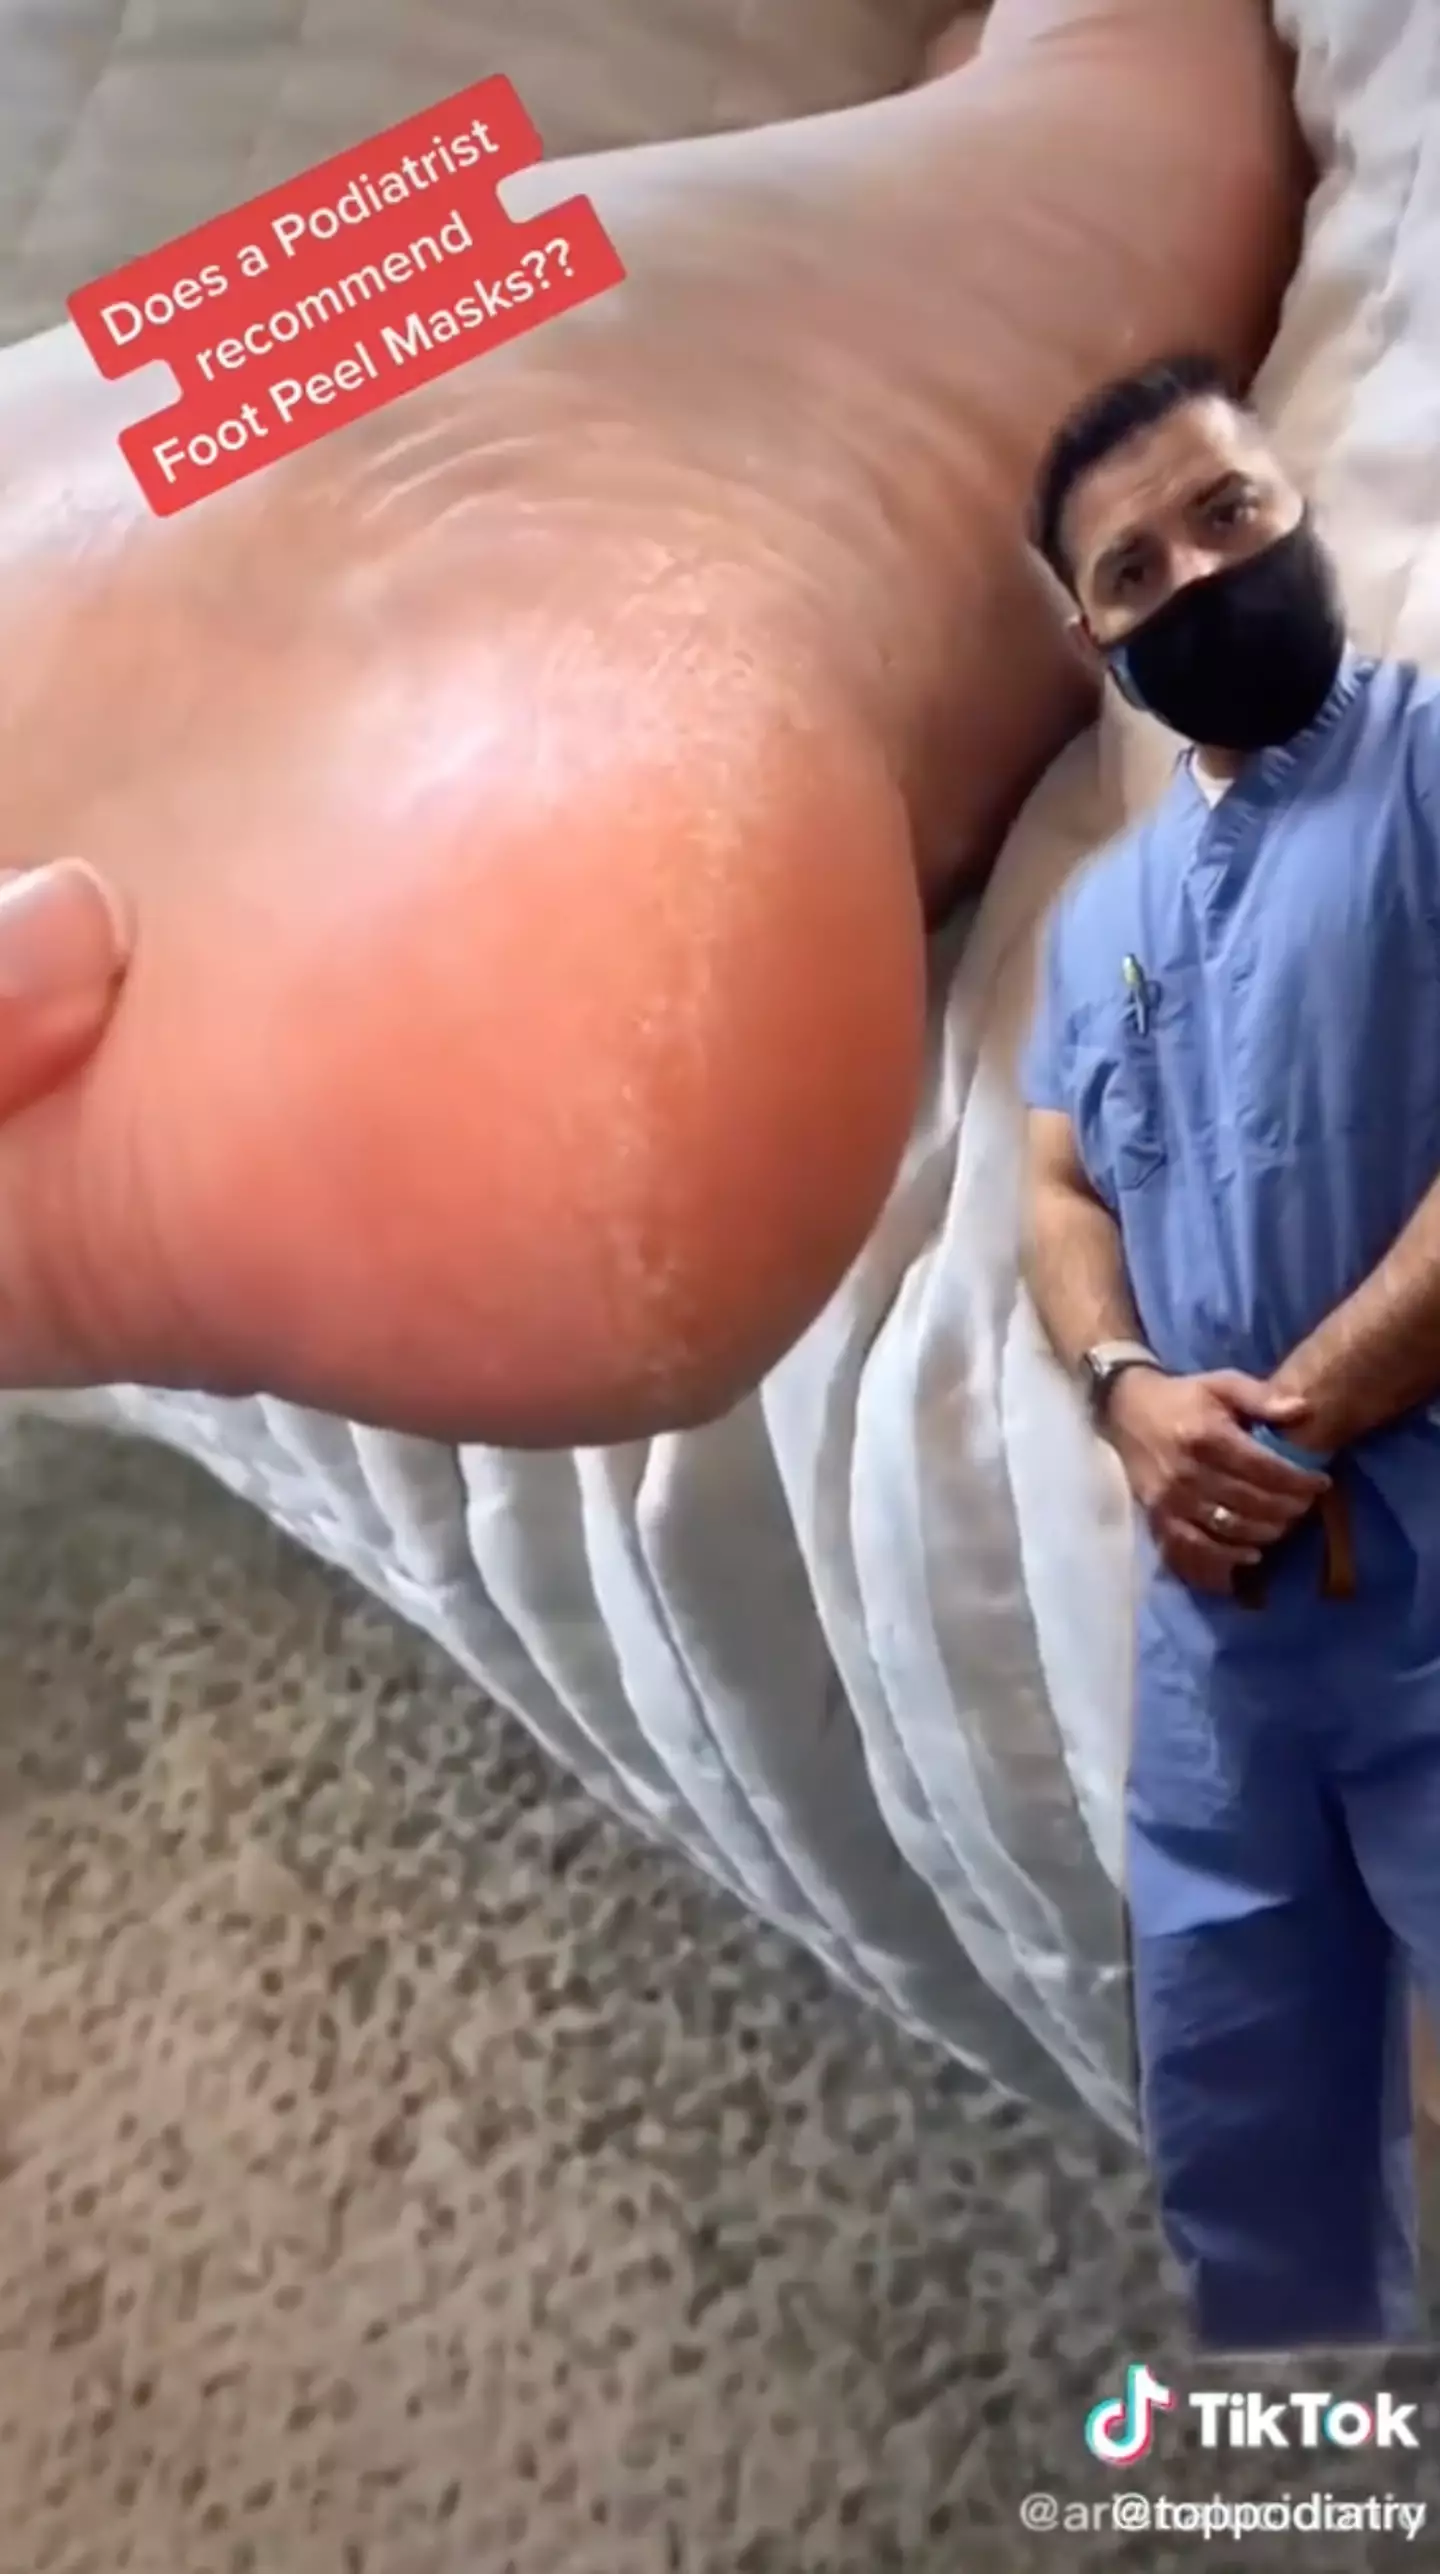 TikTok podiatrist @TopPodiatry recommended the foot peels. (